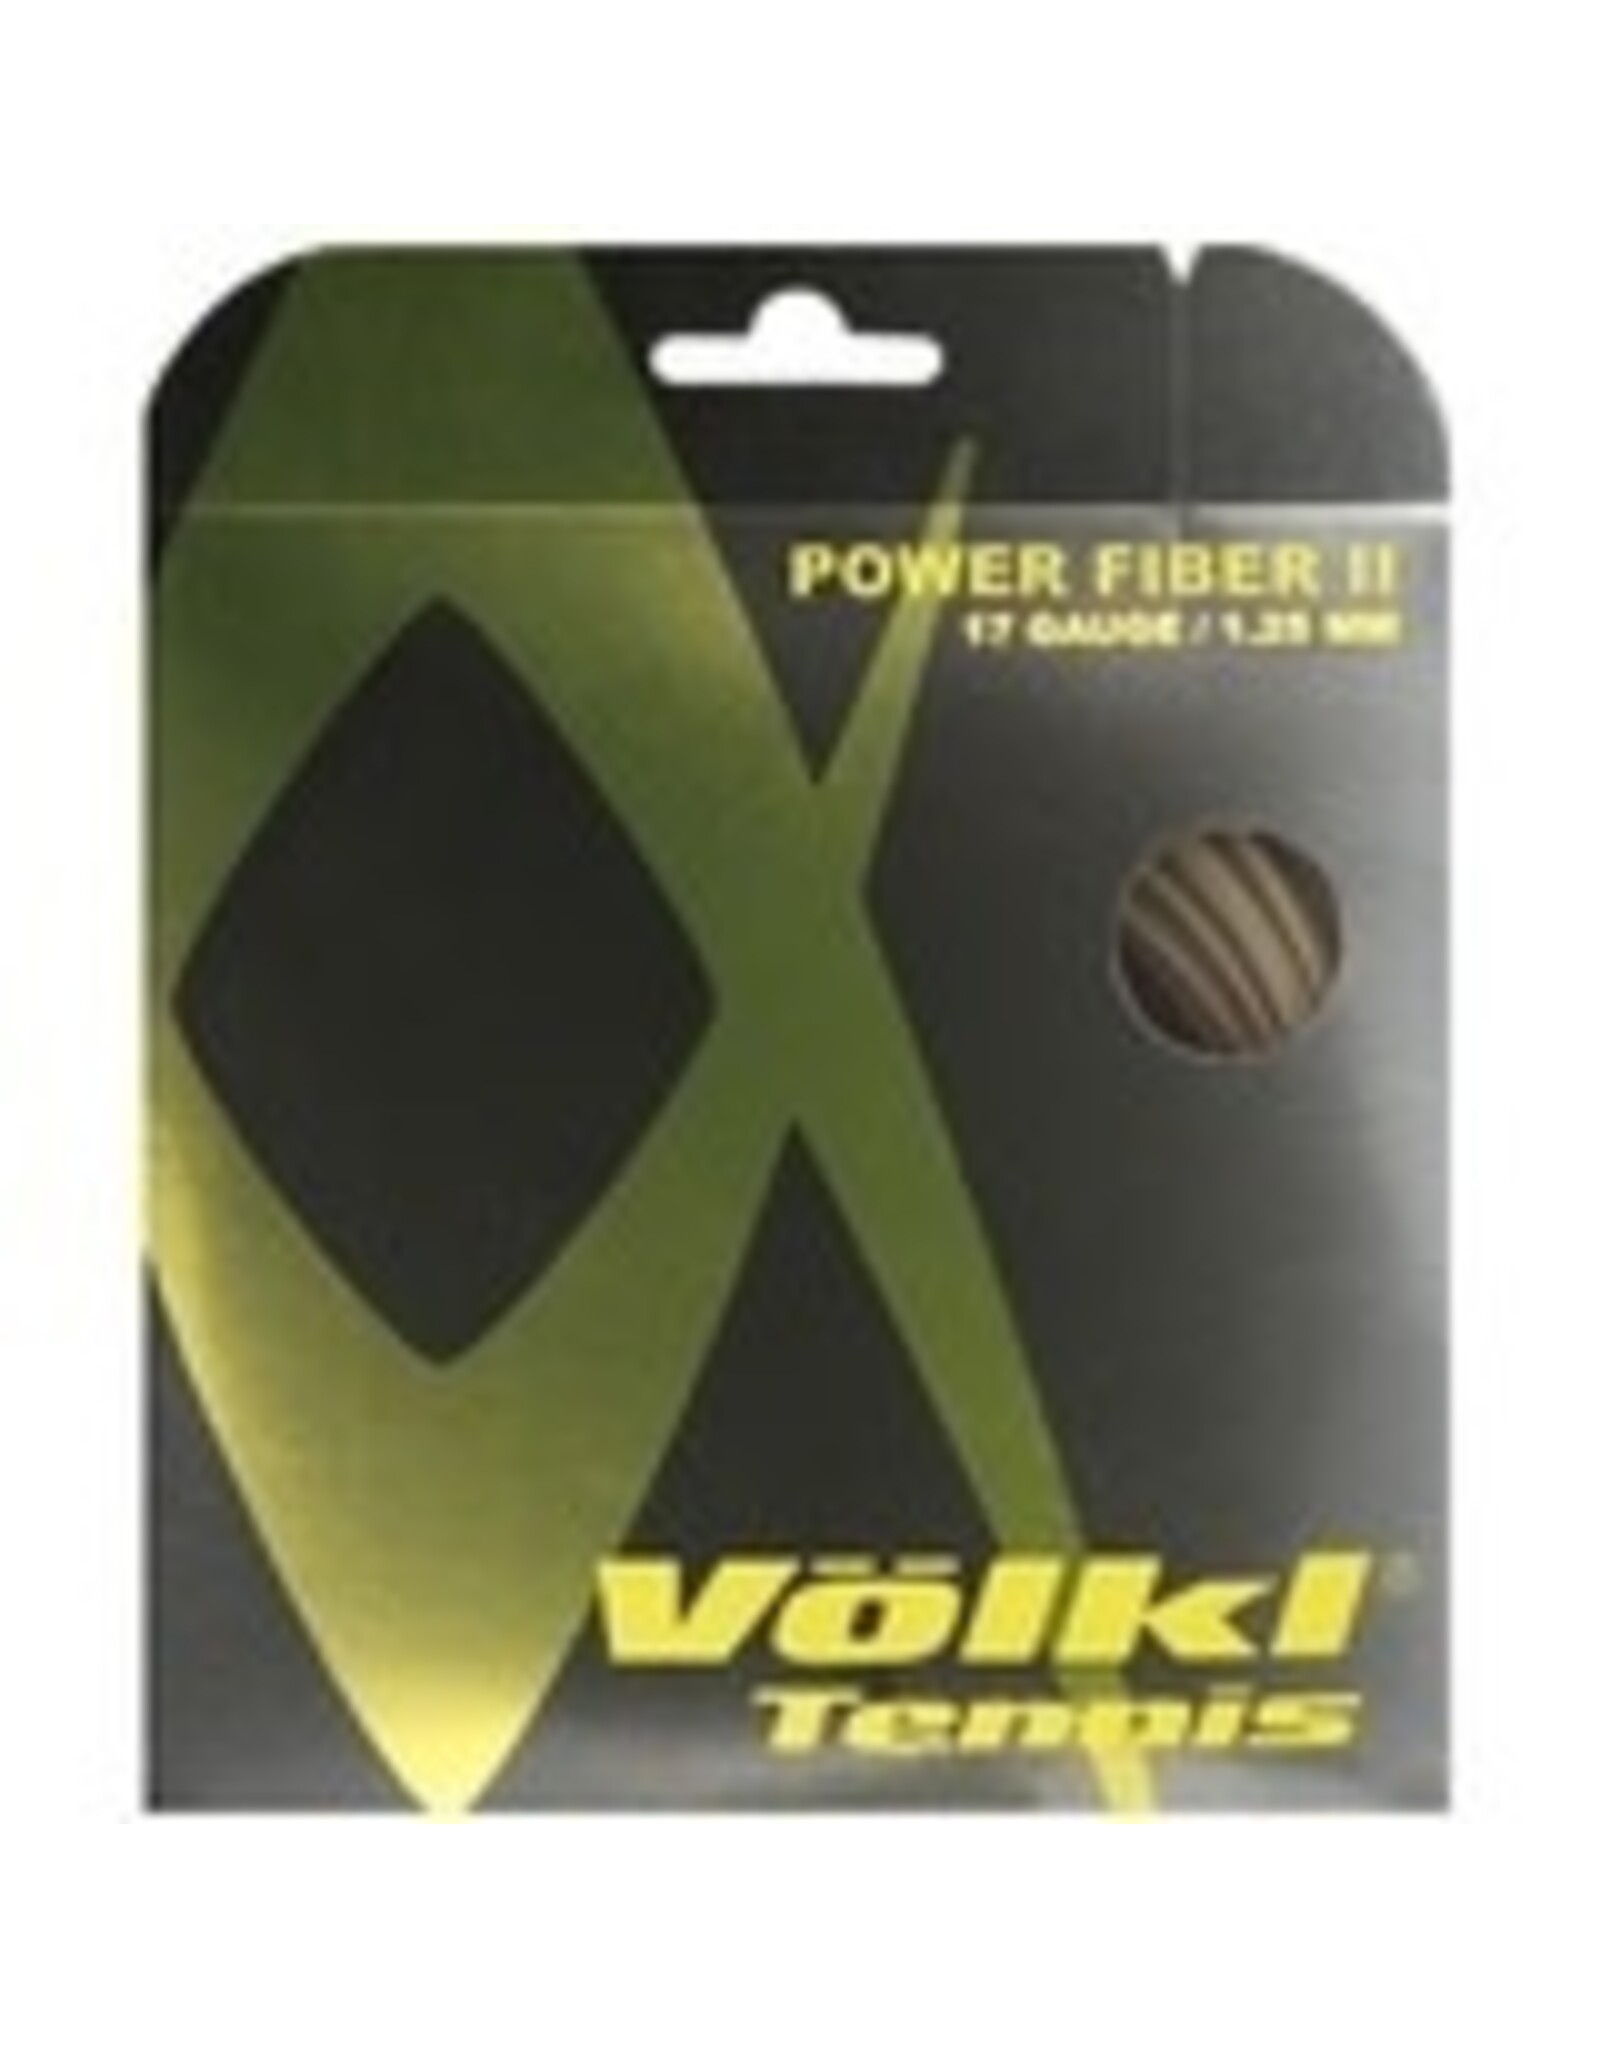 Volkl Power Fiber II 17g (1.25mm) Set